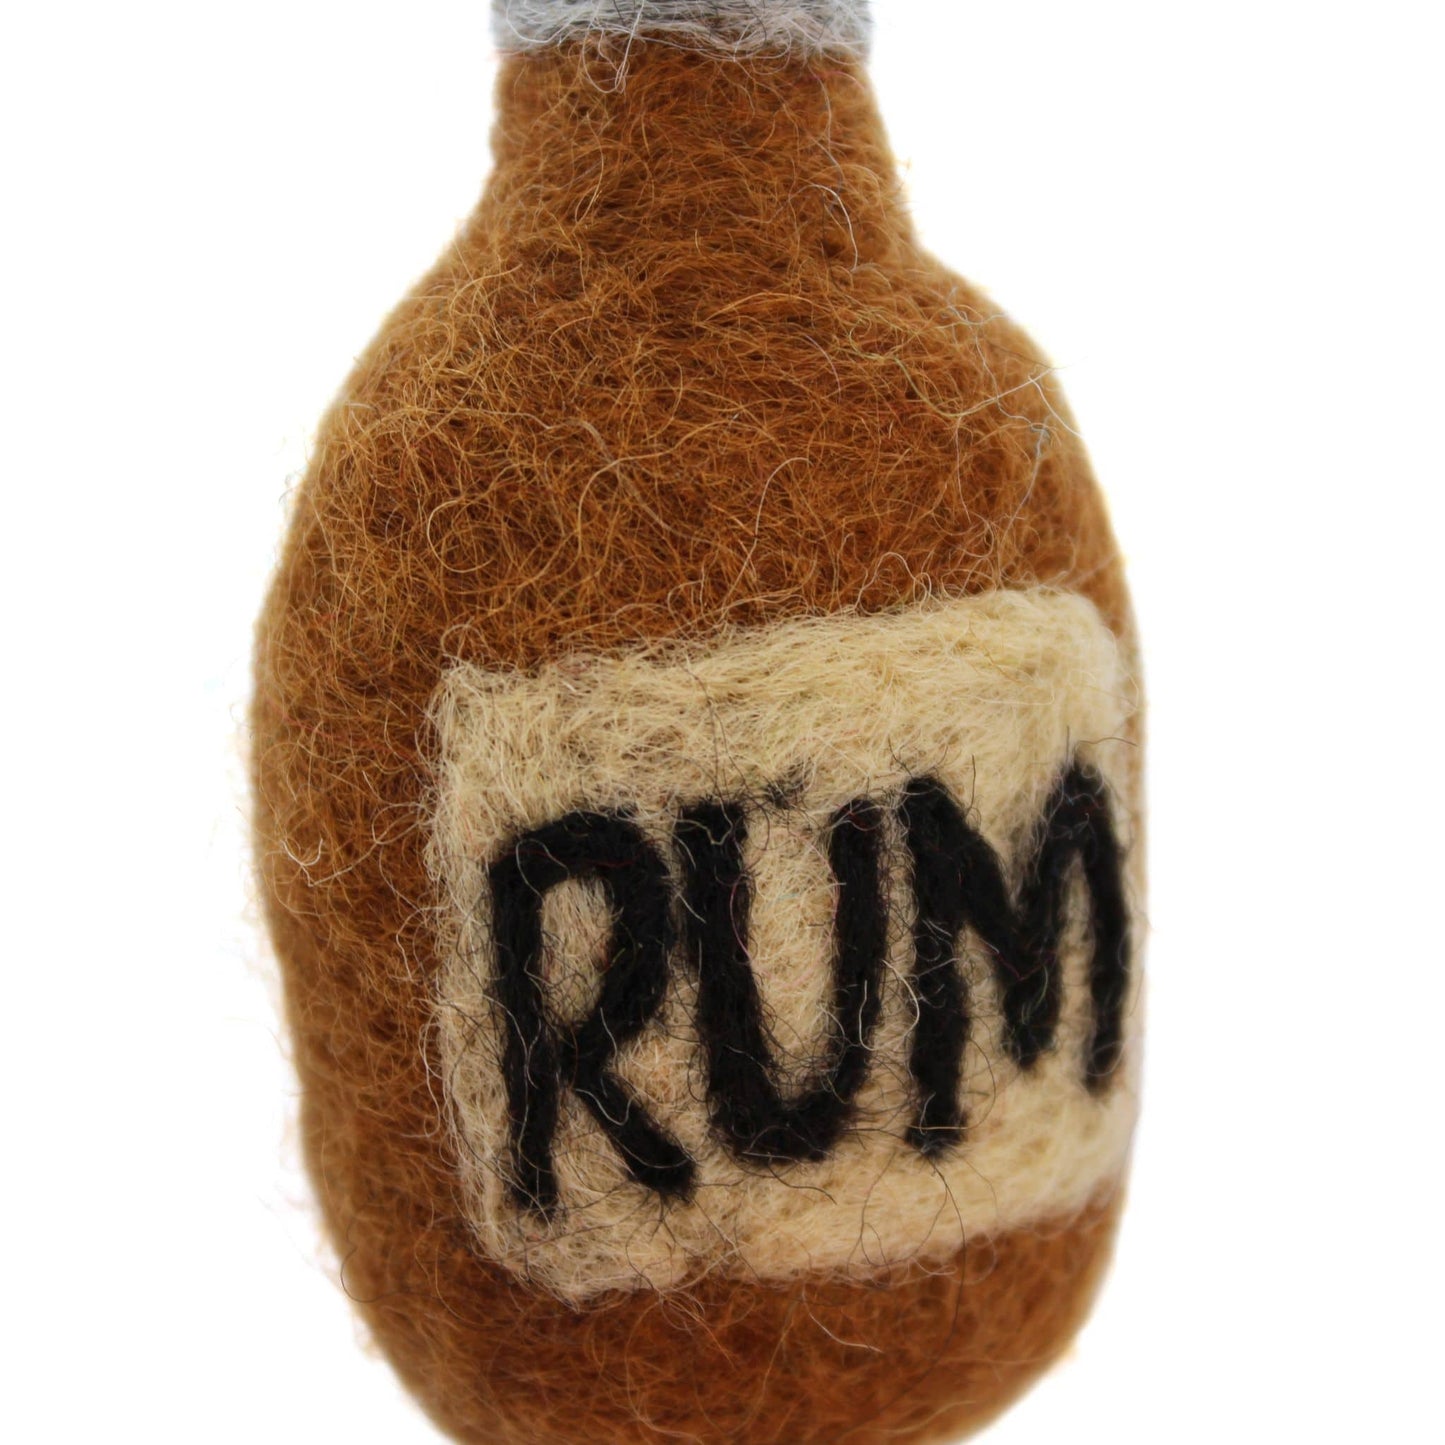 Bottle of Rum  Handmade Felt Decoration - close up